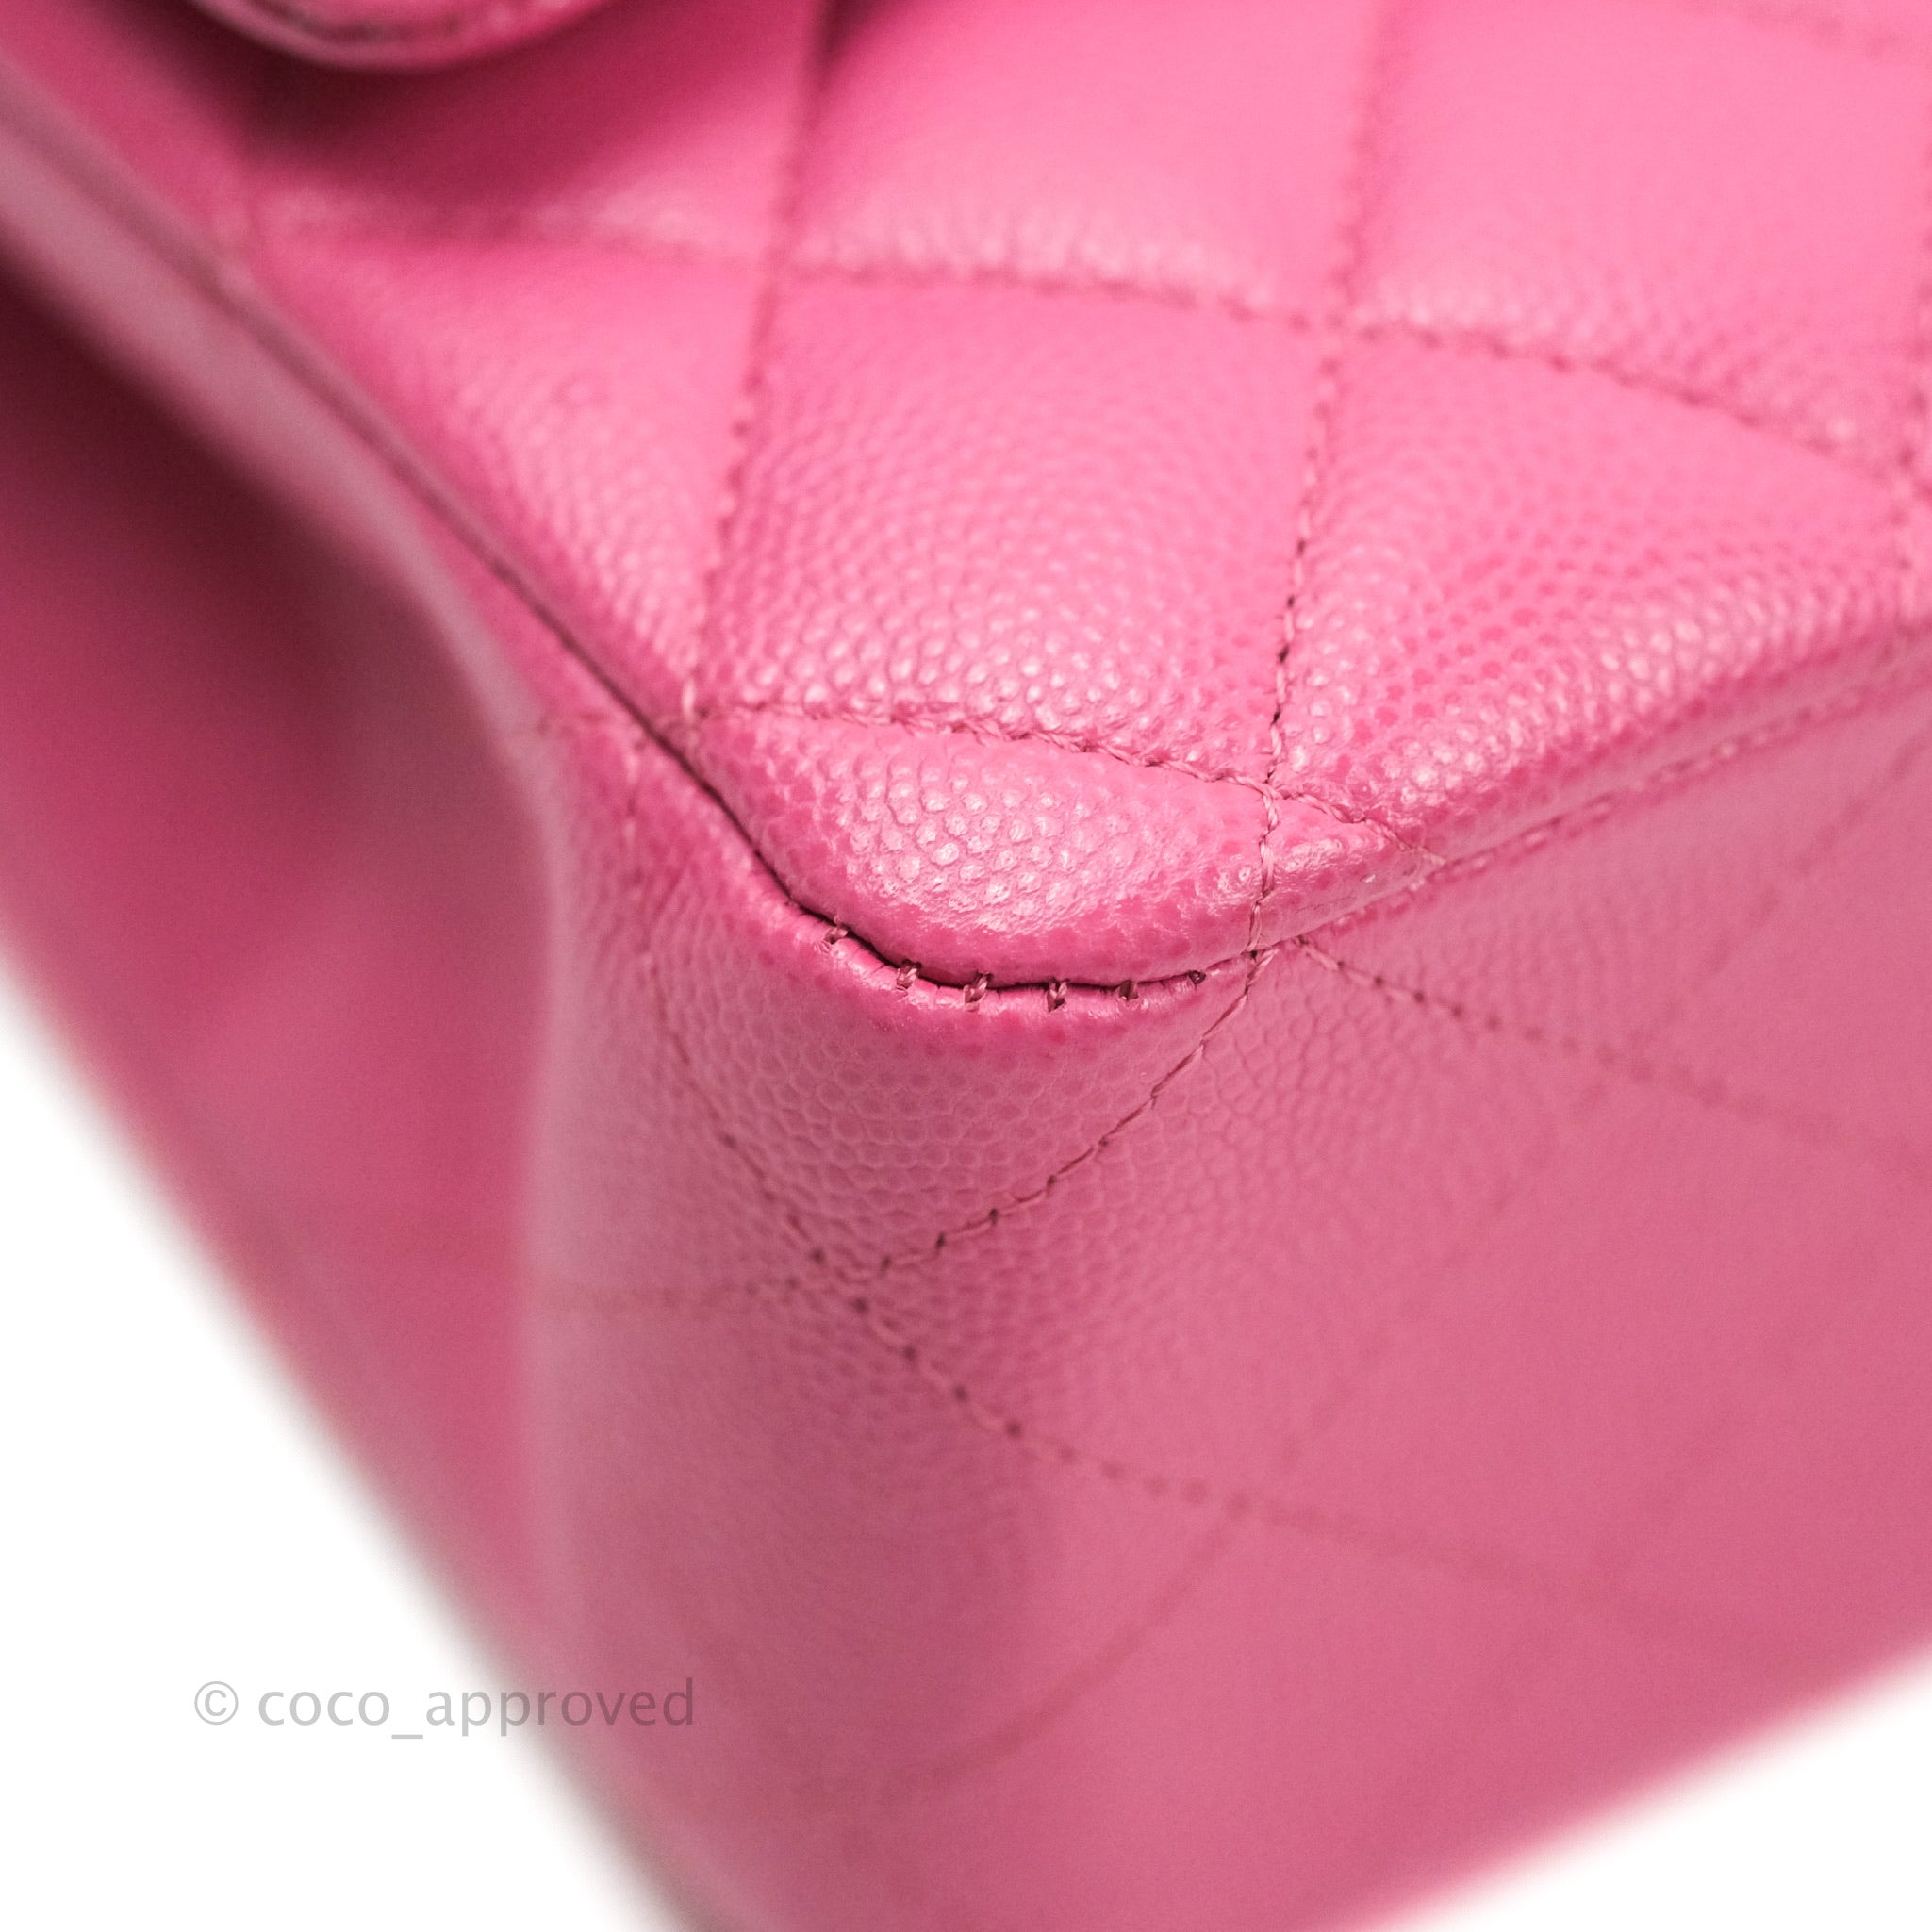 Chanel Jumbo Classic Double Flap Bag Fuchsia Pink Lambskin